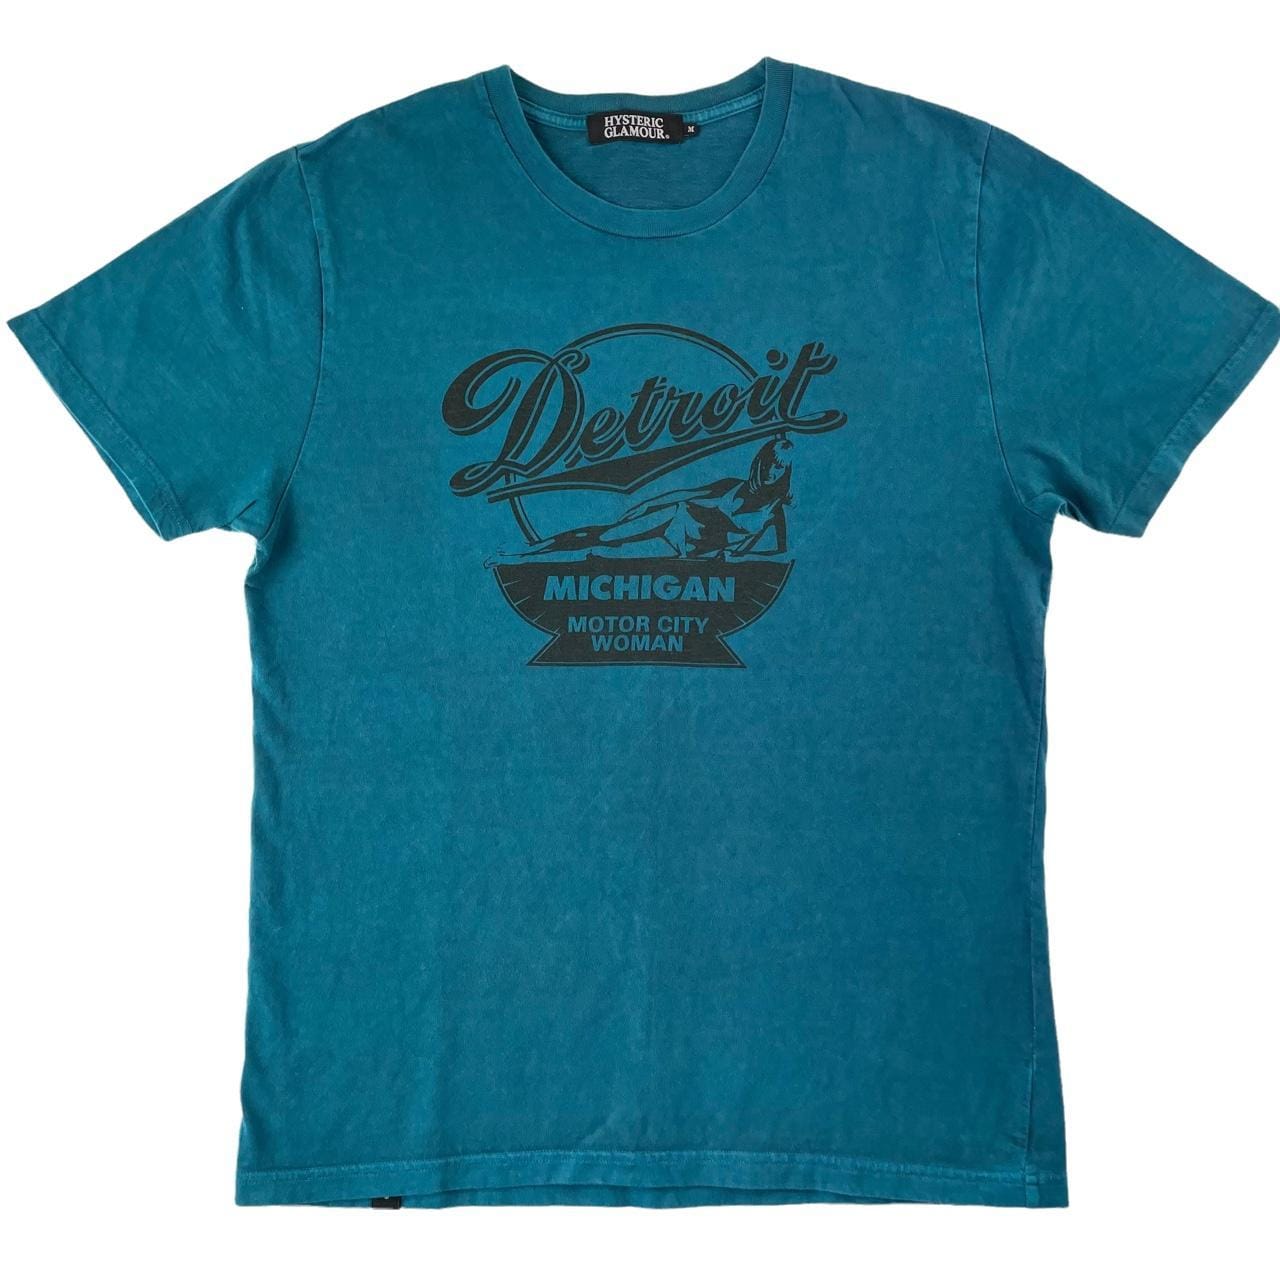 Vintage Hysteric Glamour Detroit t shirt size M - second